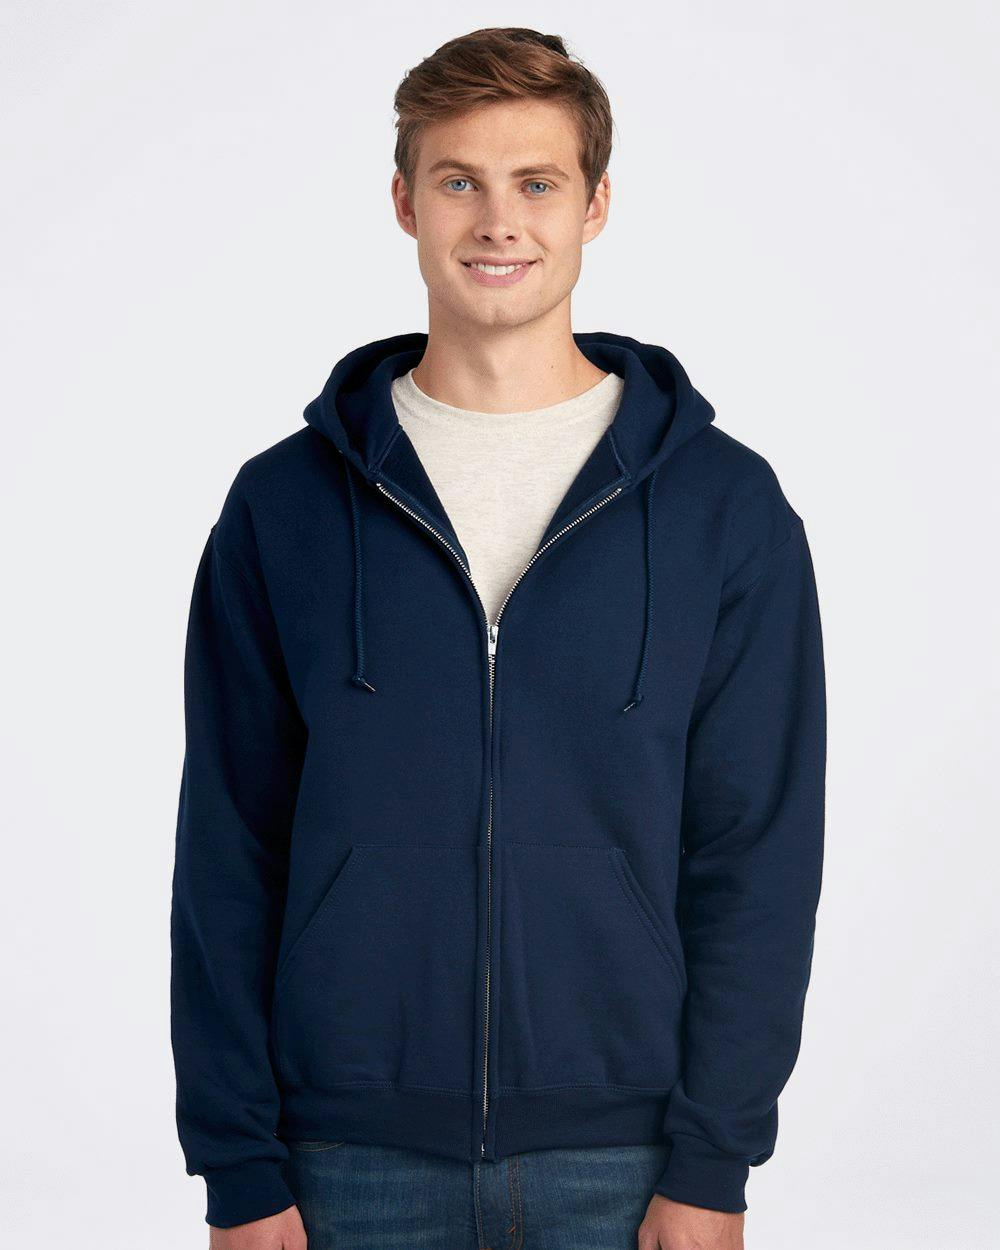 Image for Super Sweats NuBlend® Full-Zip Hooded Sweatshirt - 4999MR